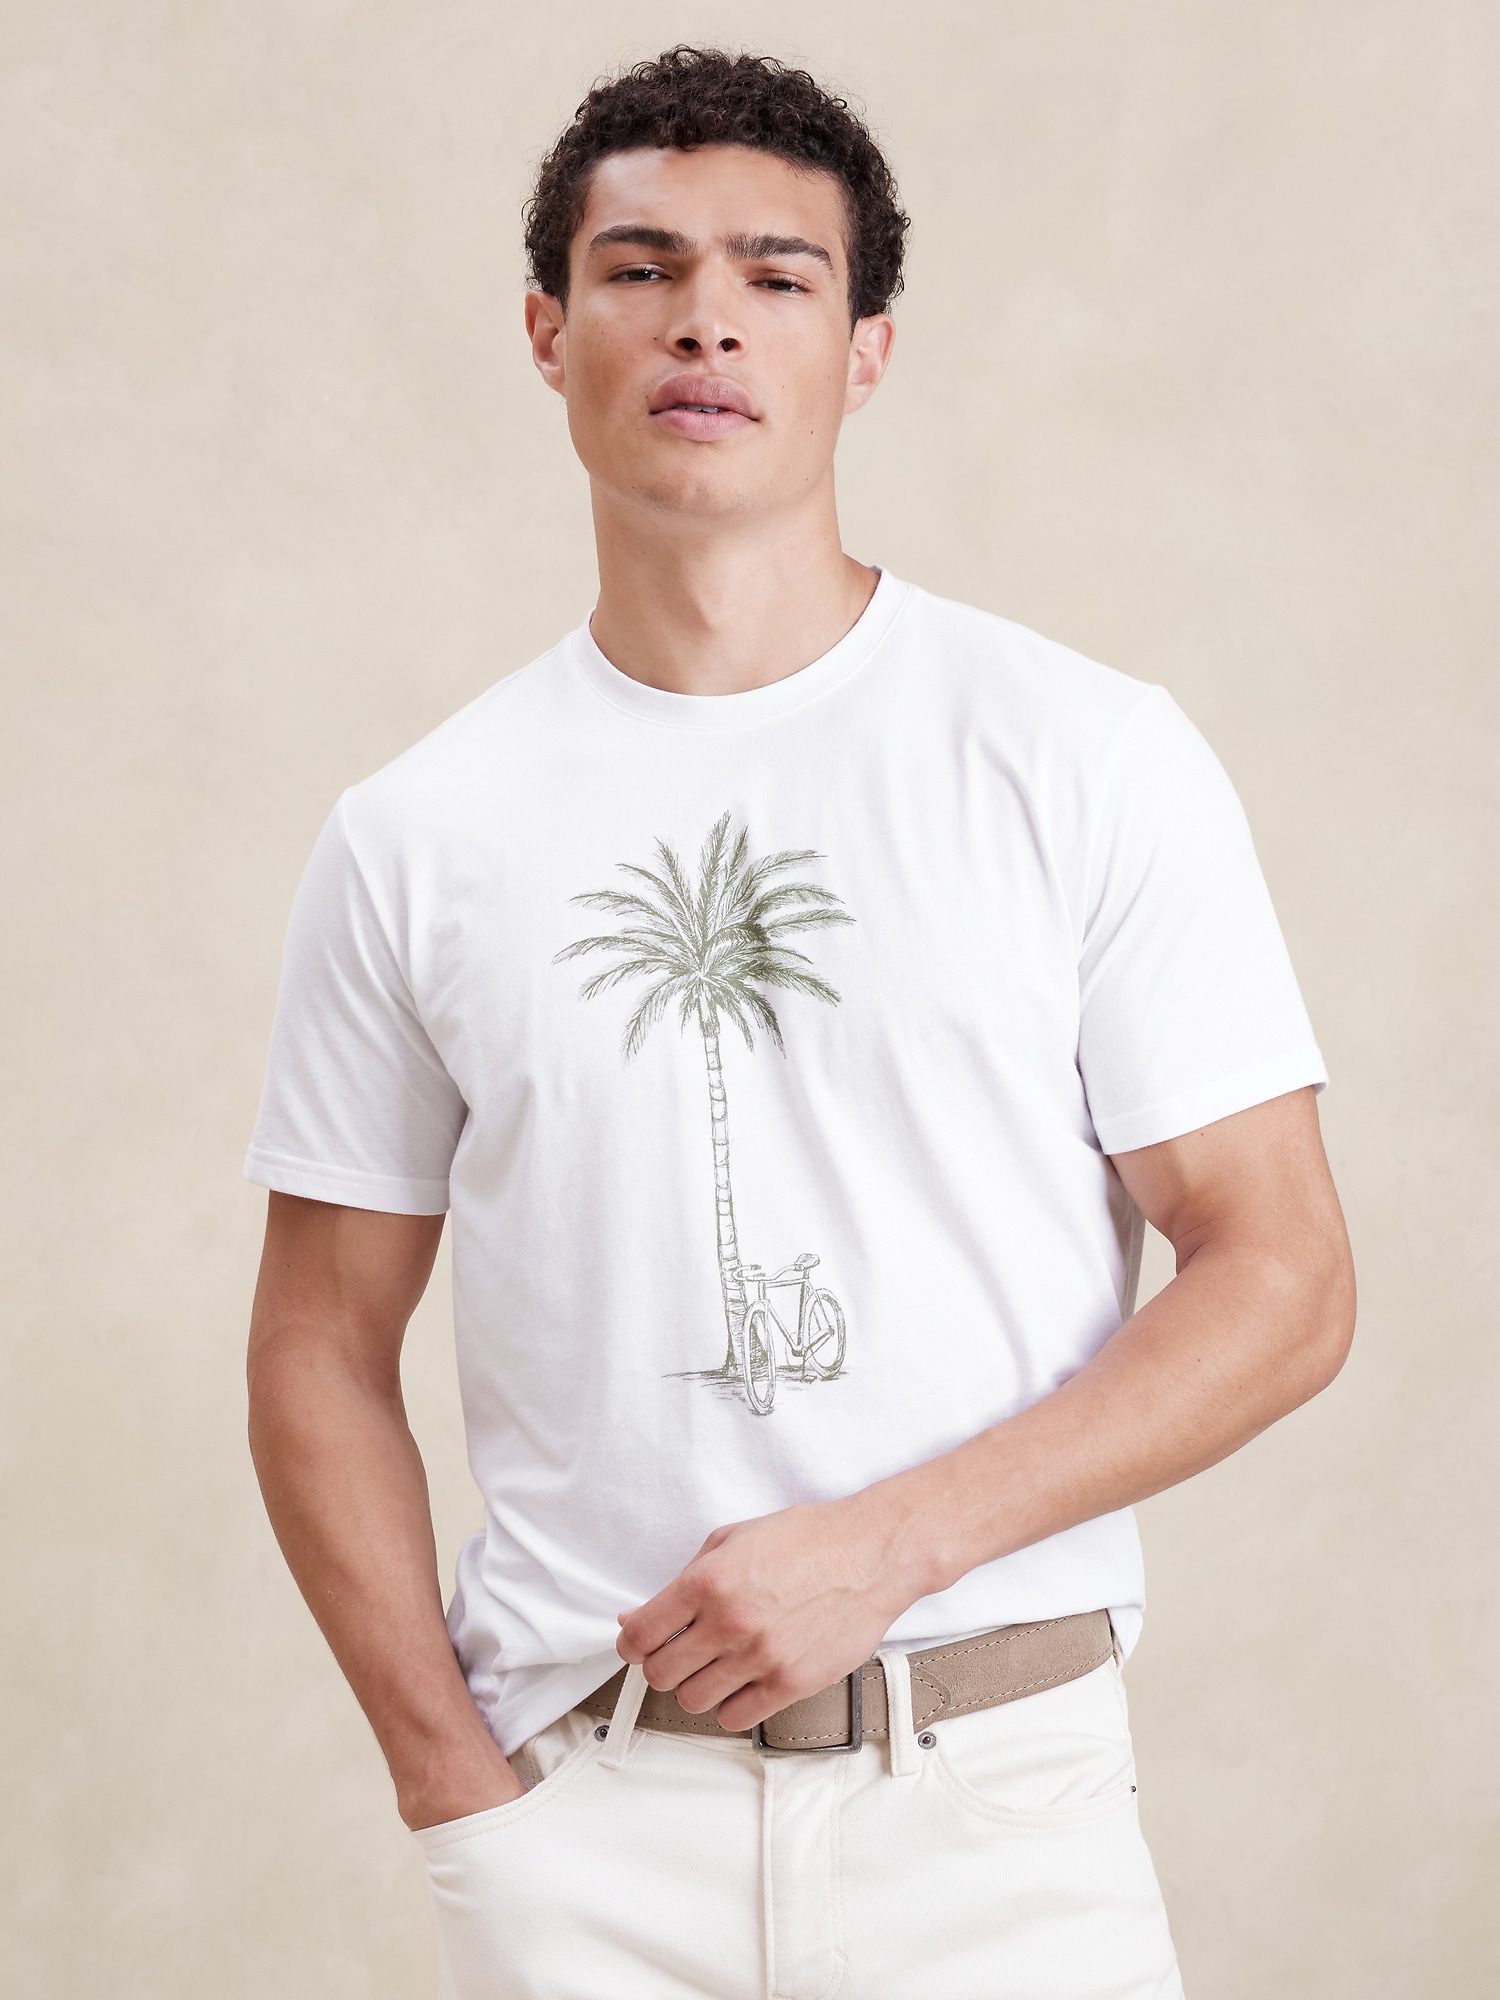 Single Palm Tree Graphic T-Shirt